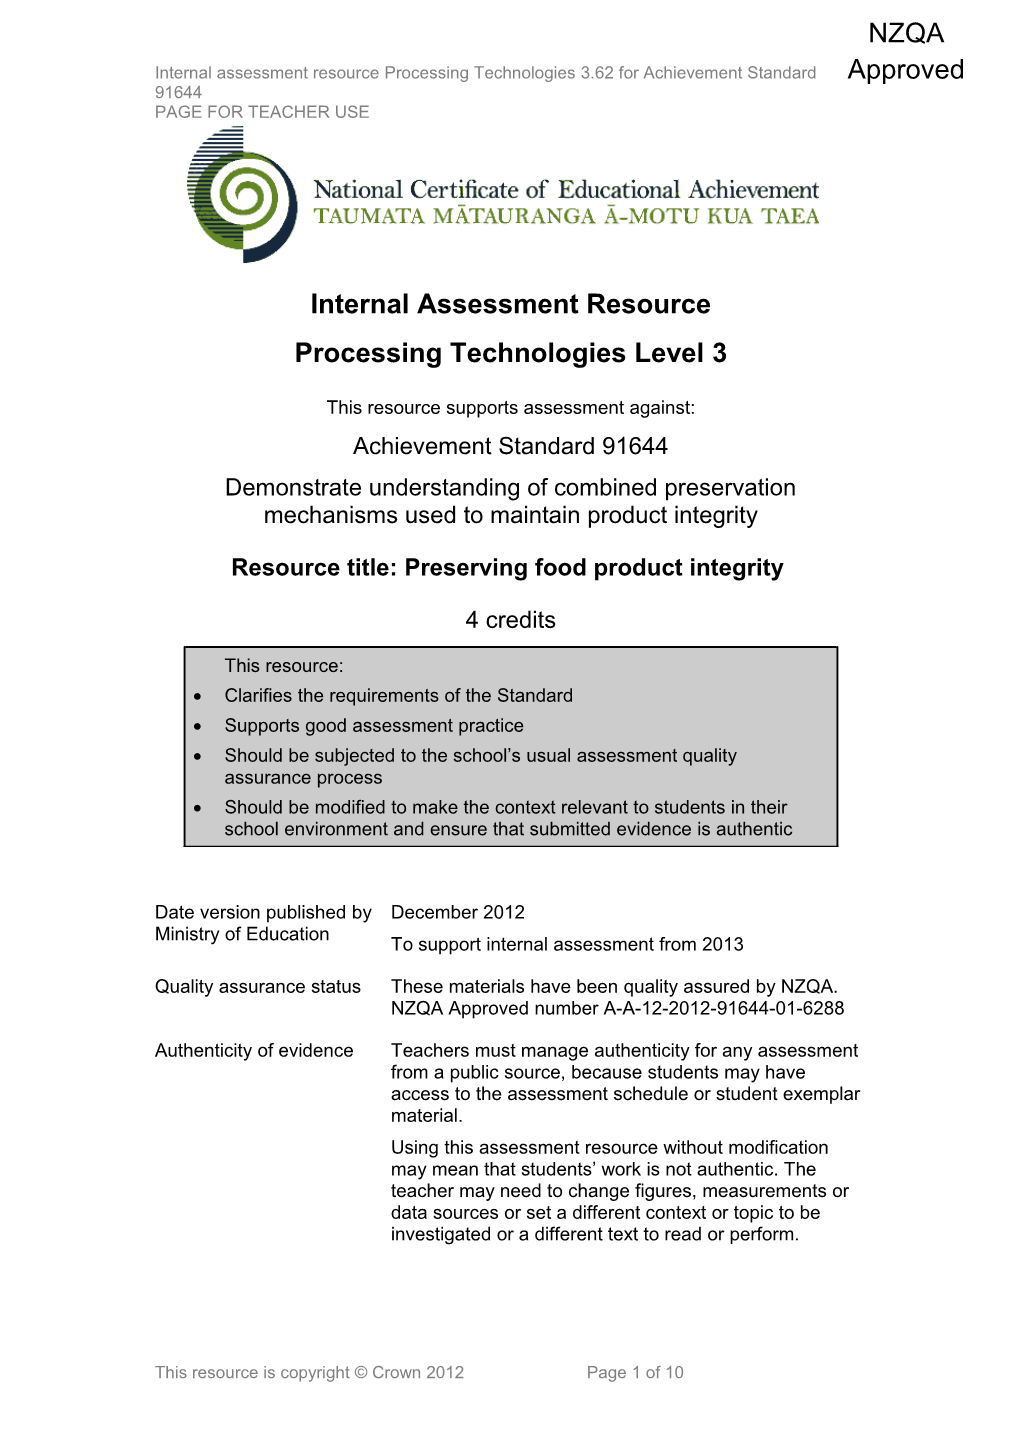 Level 3 Processing Technologies Internal Assessment Resource